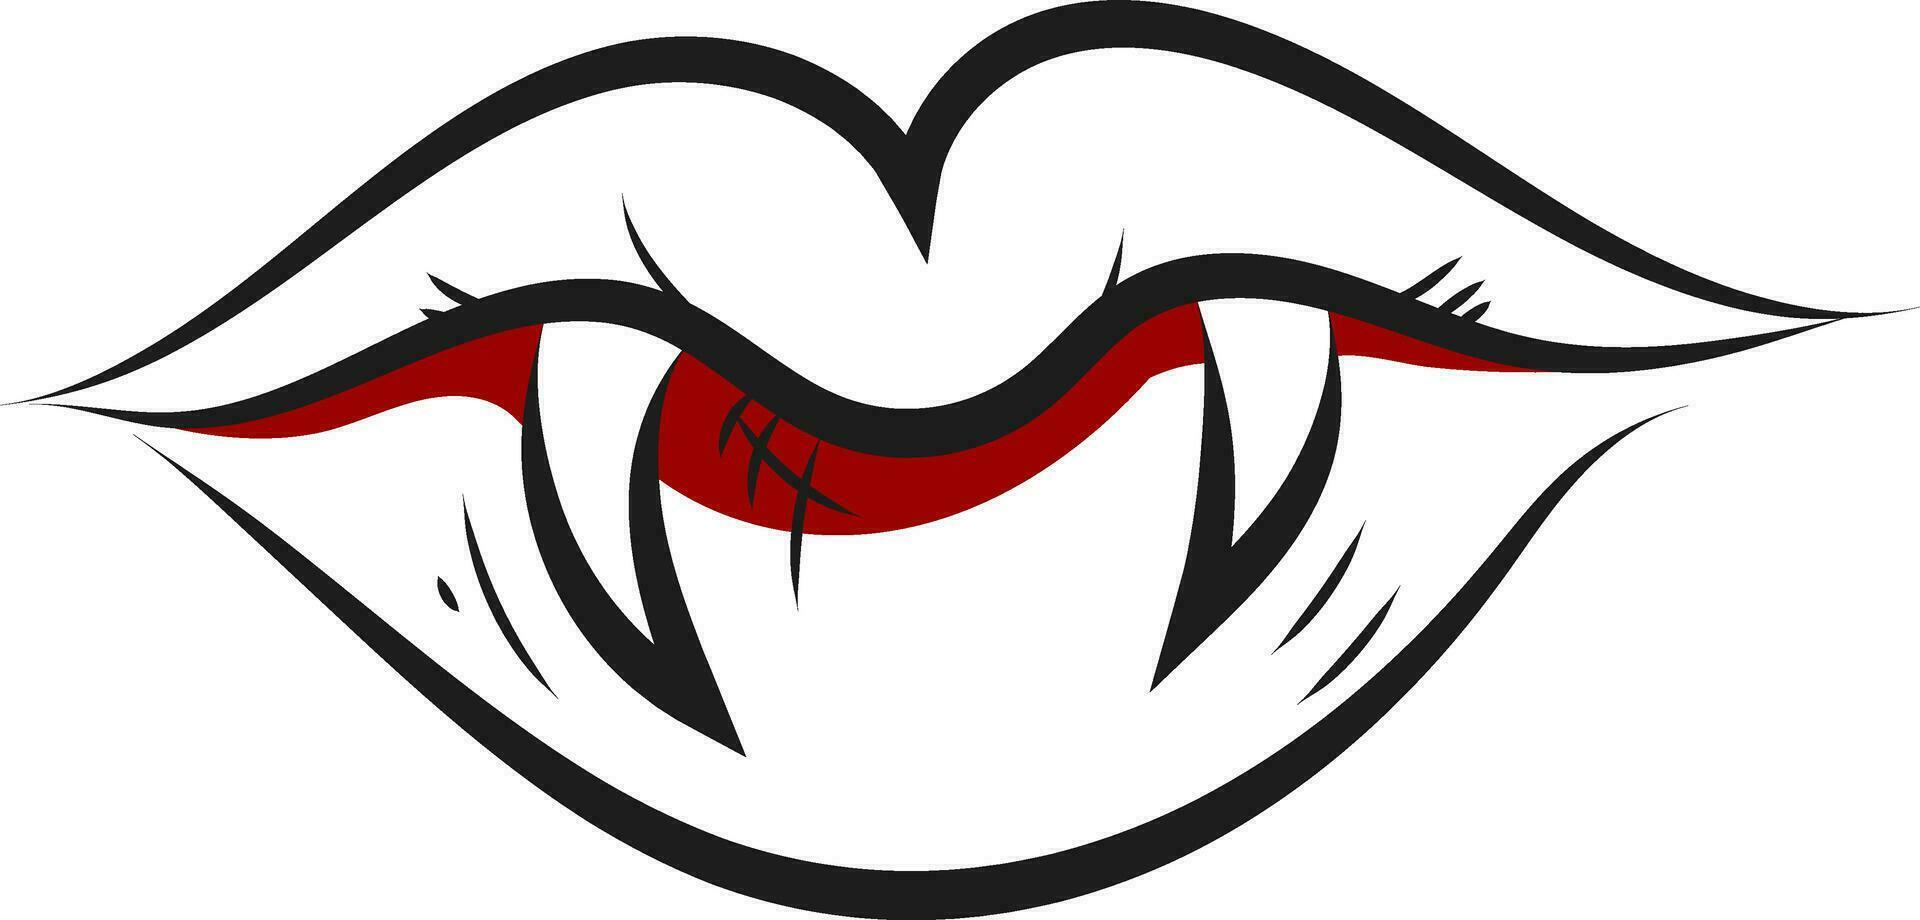 Vampire lips tattoo , illustration, vector on a white background.